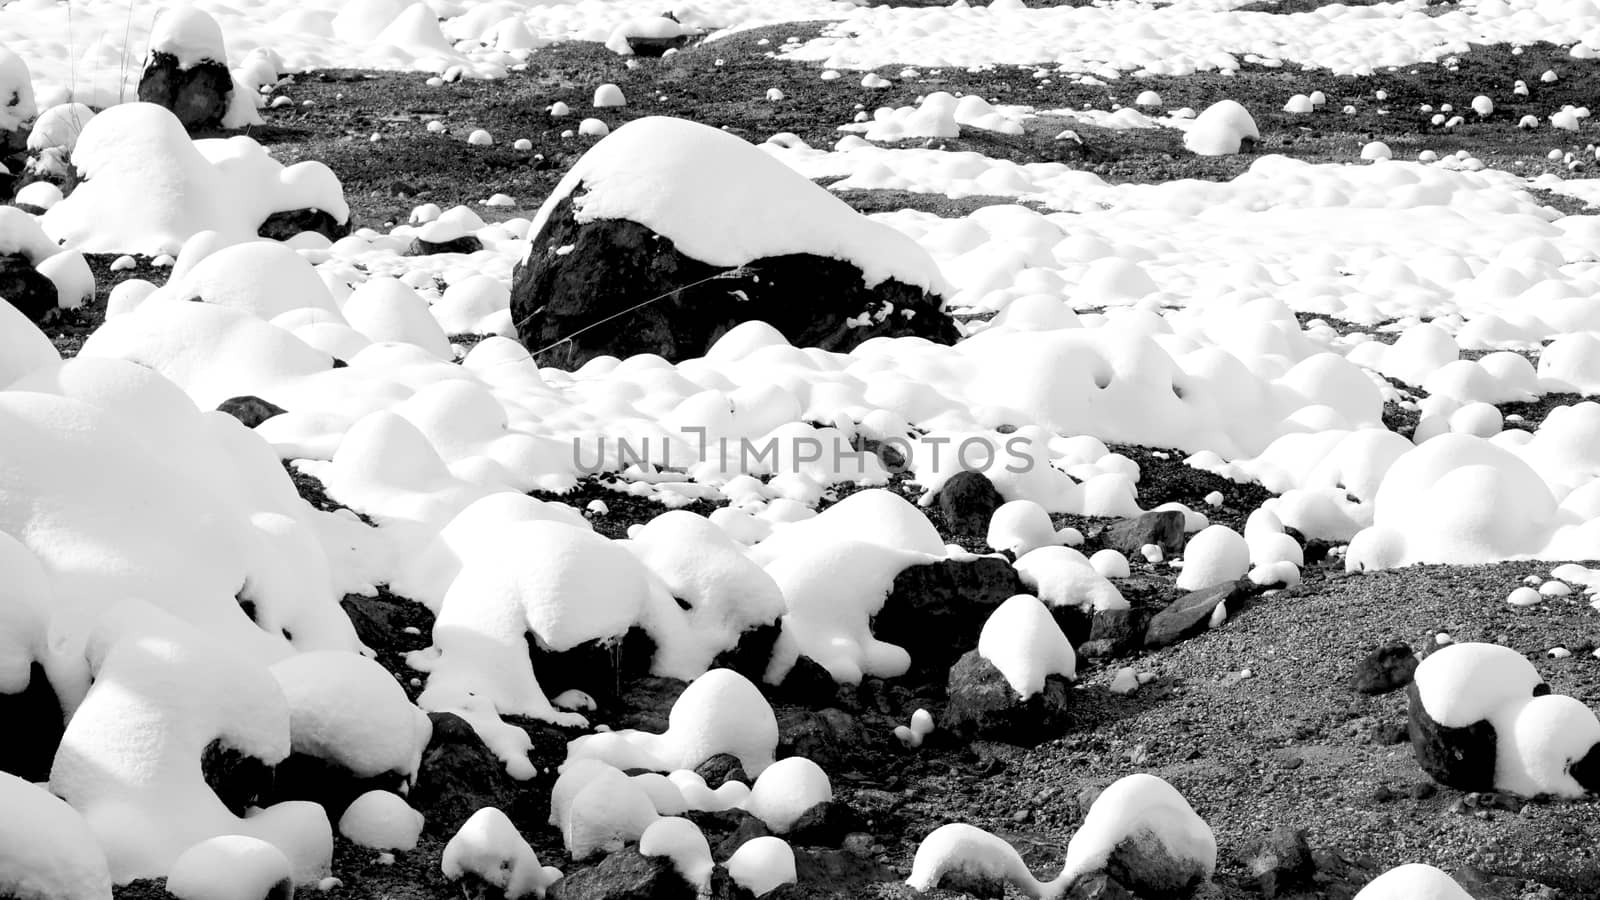 Closeup stone and snow monochrome in the mist Noboribetsu onsen  by polarbearstudio